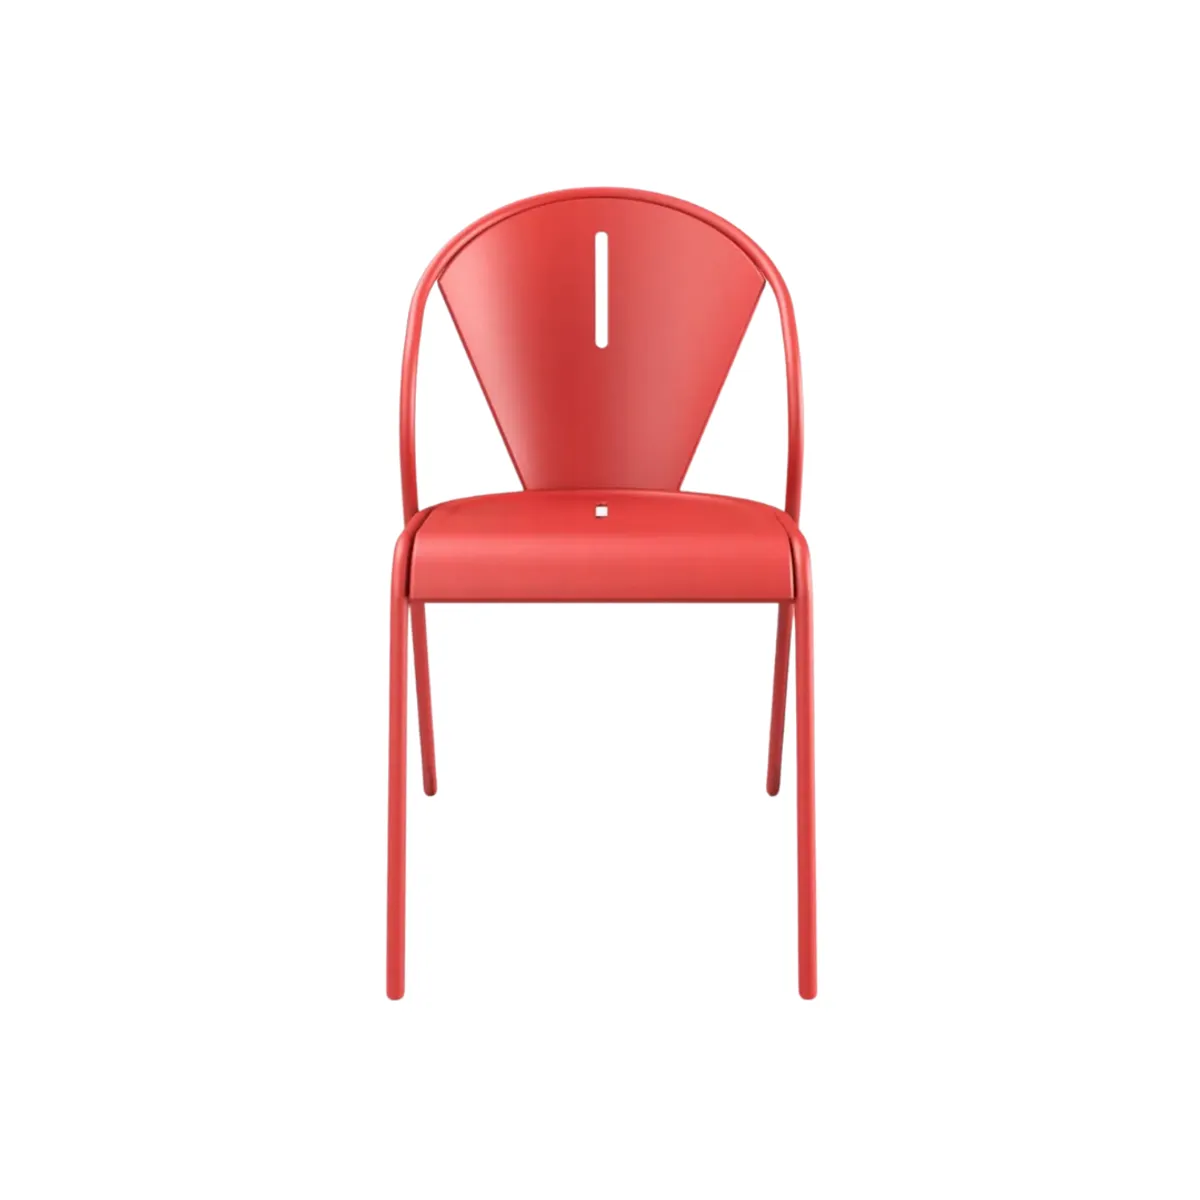 Decoda side chair 3